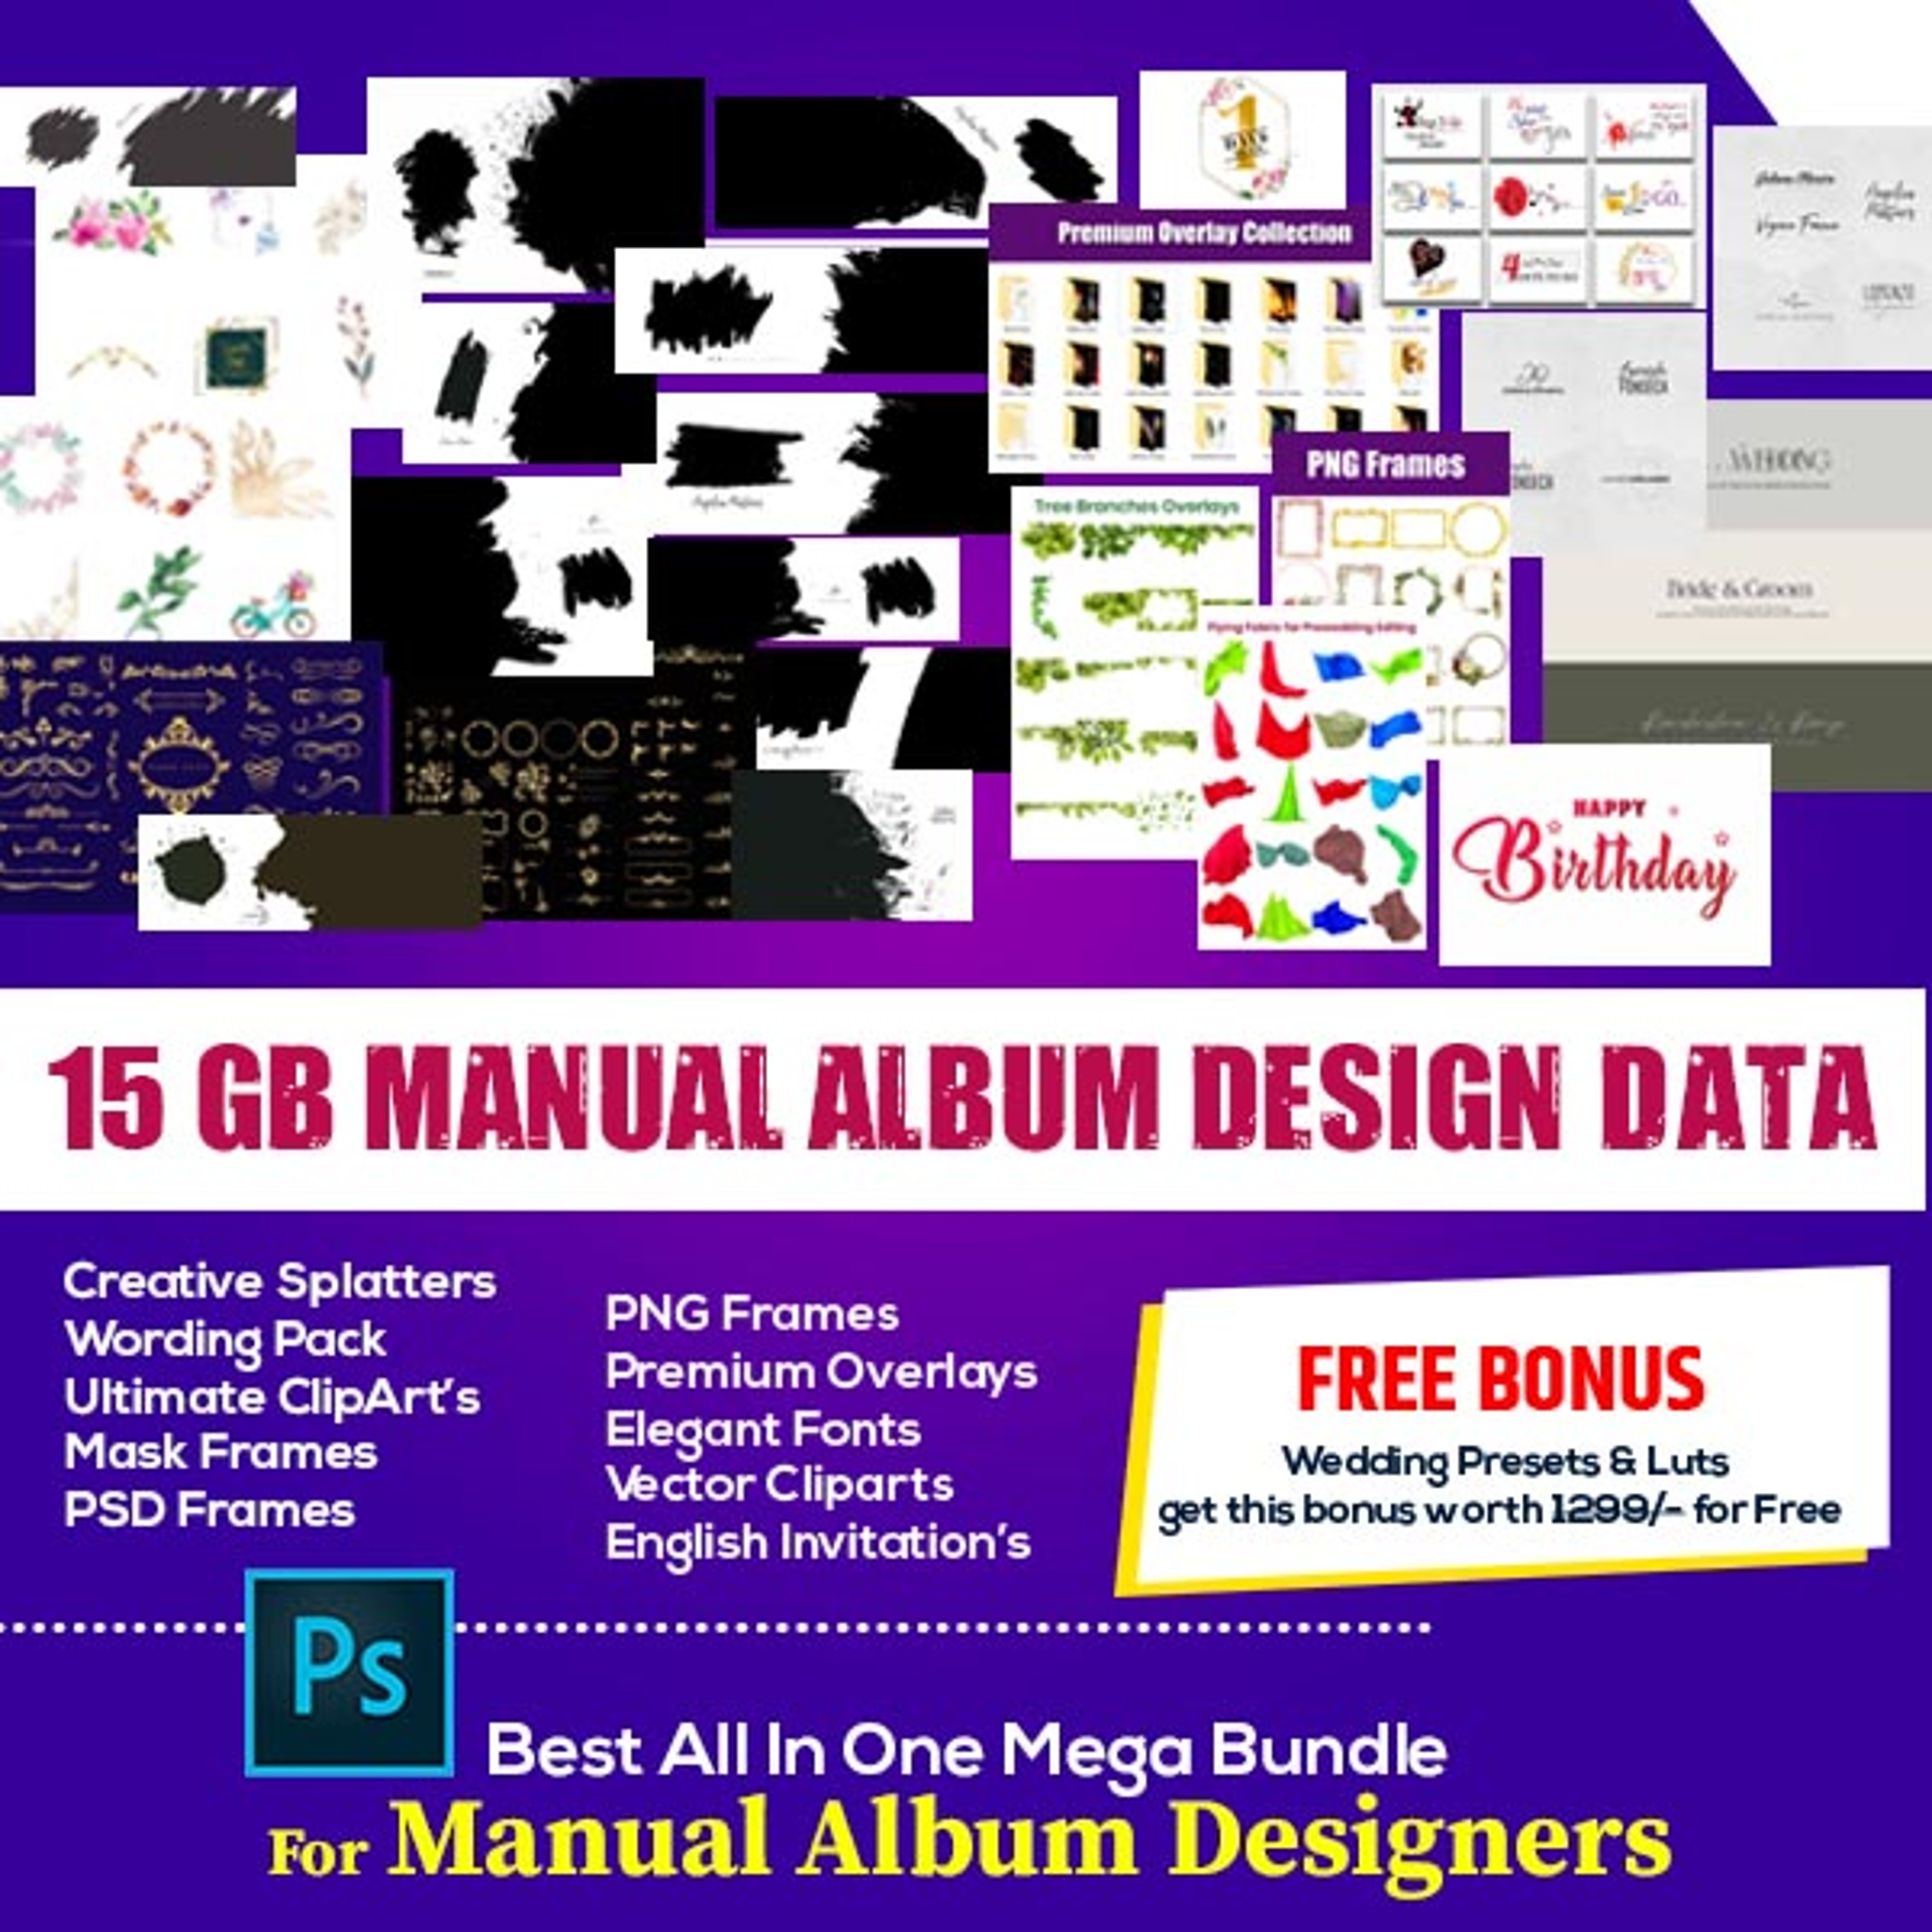 Manual Album Design Premium Data it includes ClipArts, PNG Frames, PSD Frames, Mask Frames, Wedding Presets, Overlays Collection, Creative Splatters, Wordings, Fonts For Wedding Album Design.